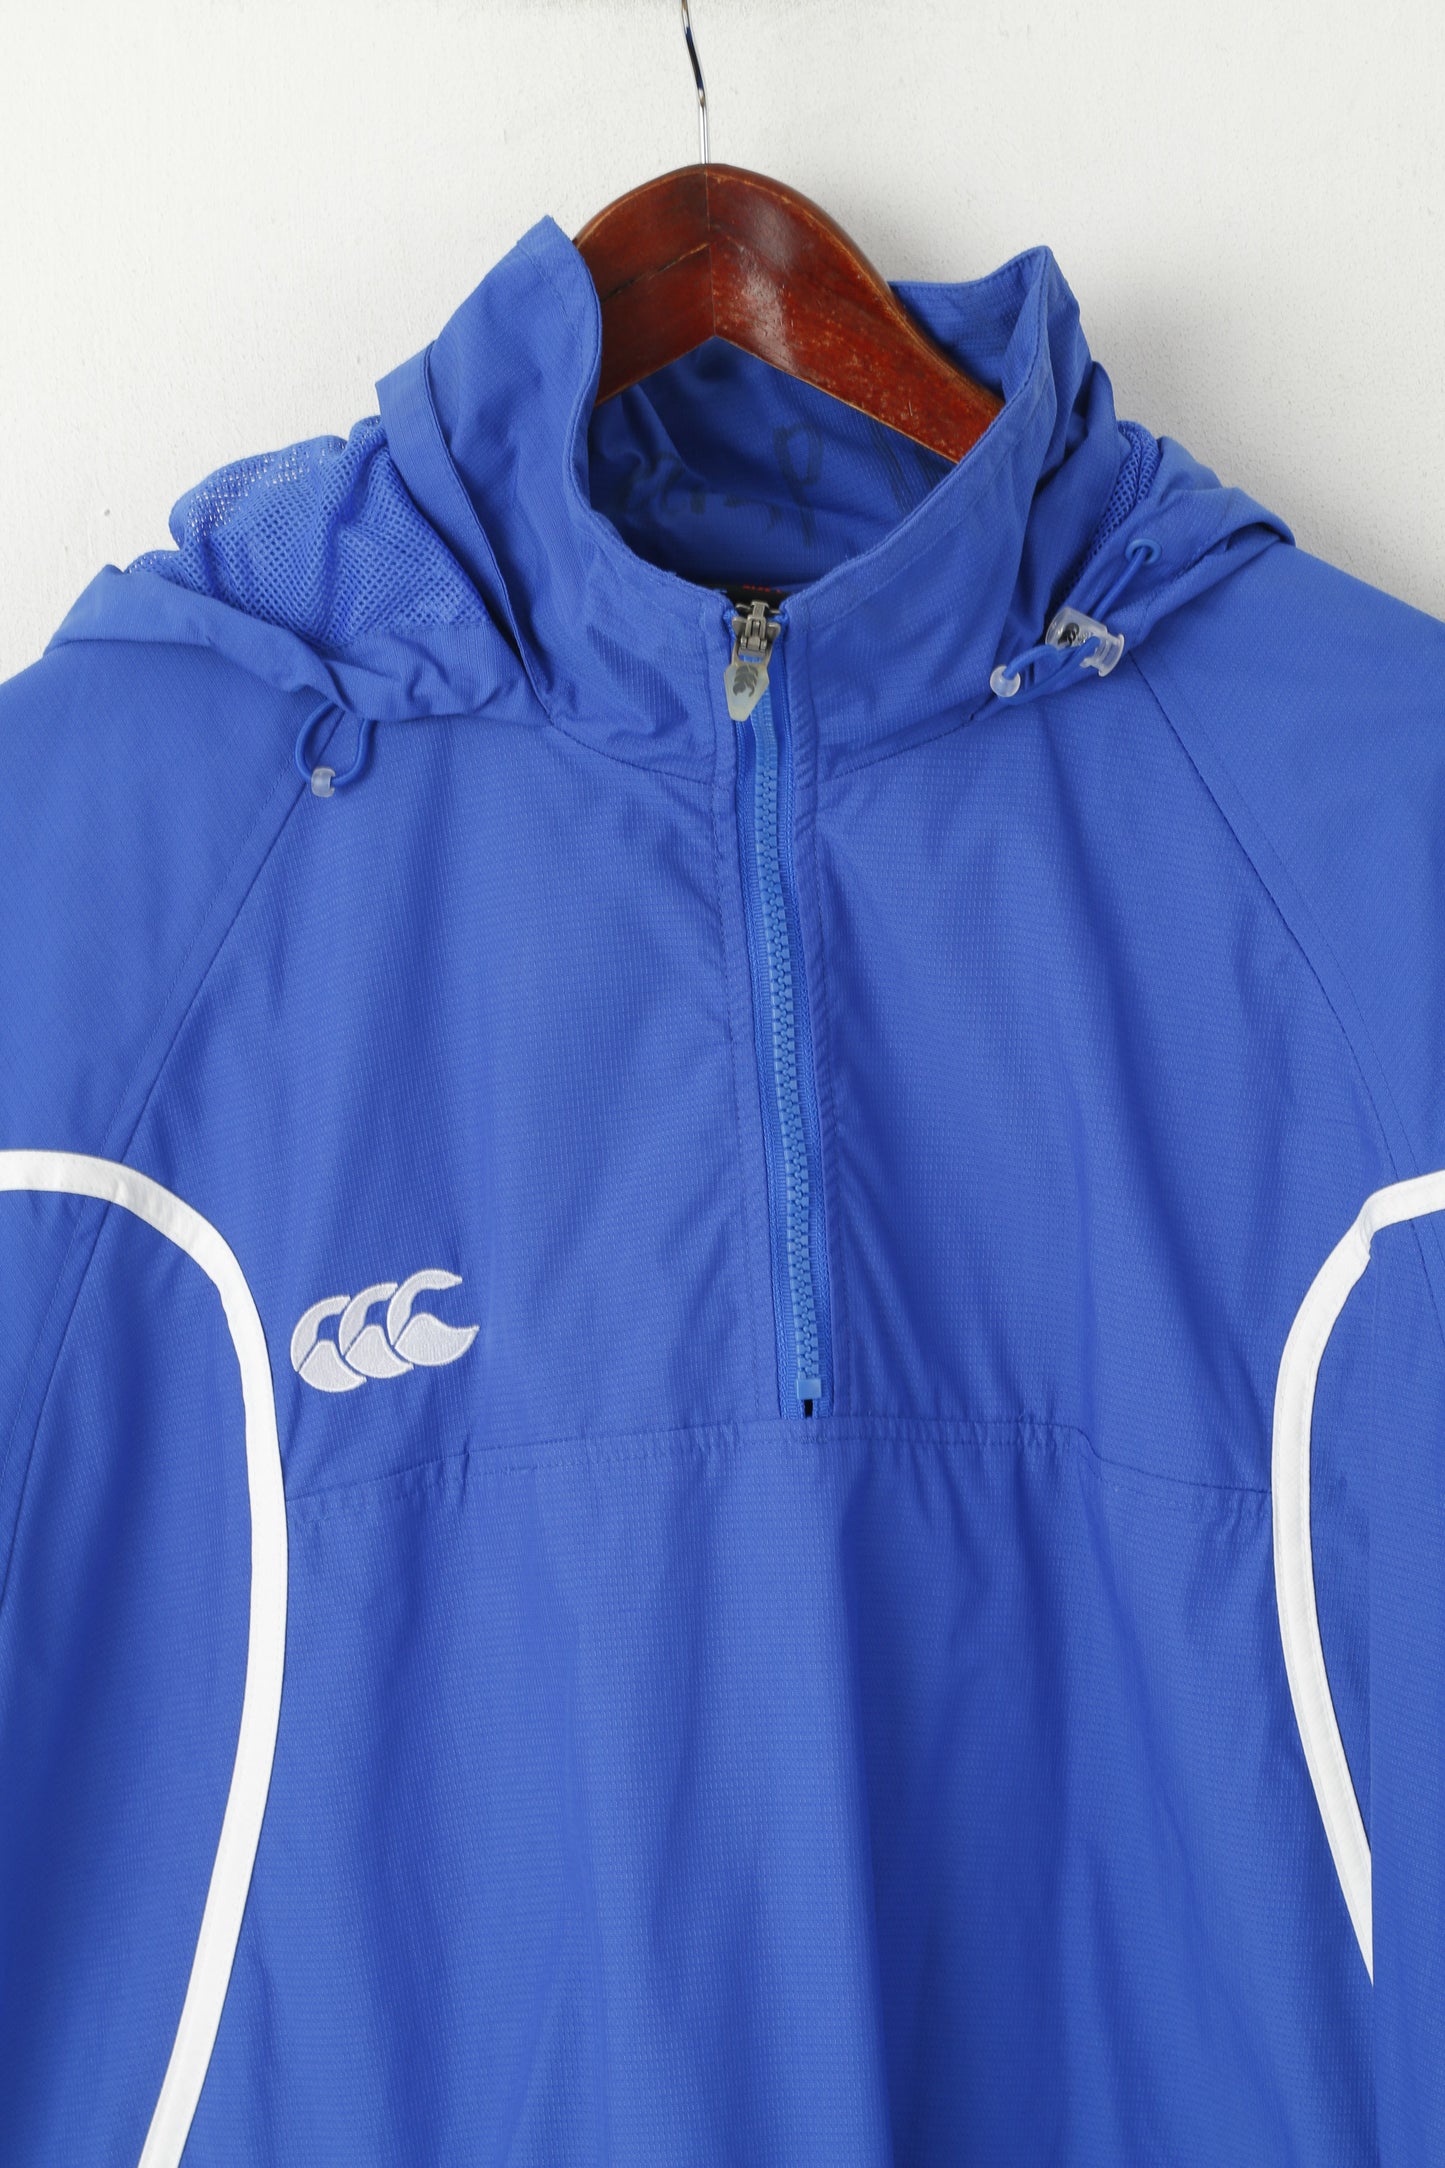 Canterbury Of New Zealand Hommes L Veste Pull Bleu À Capuche En Nylon Col Zip Haut De Sport